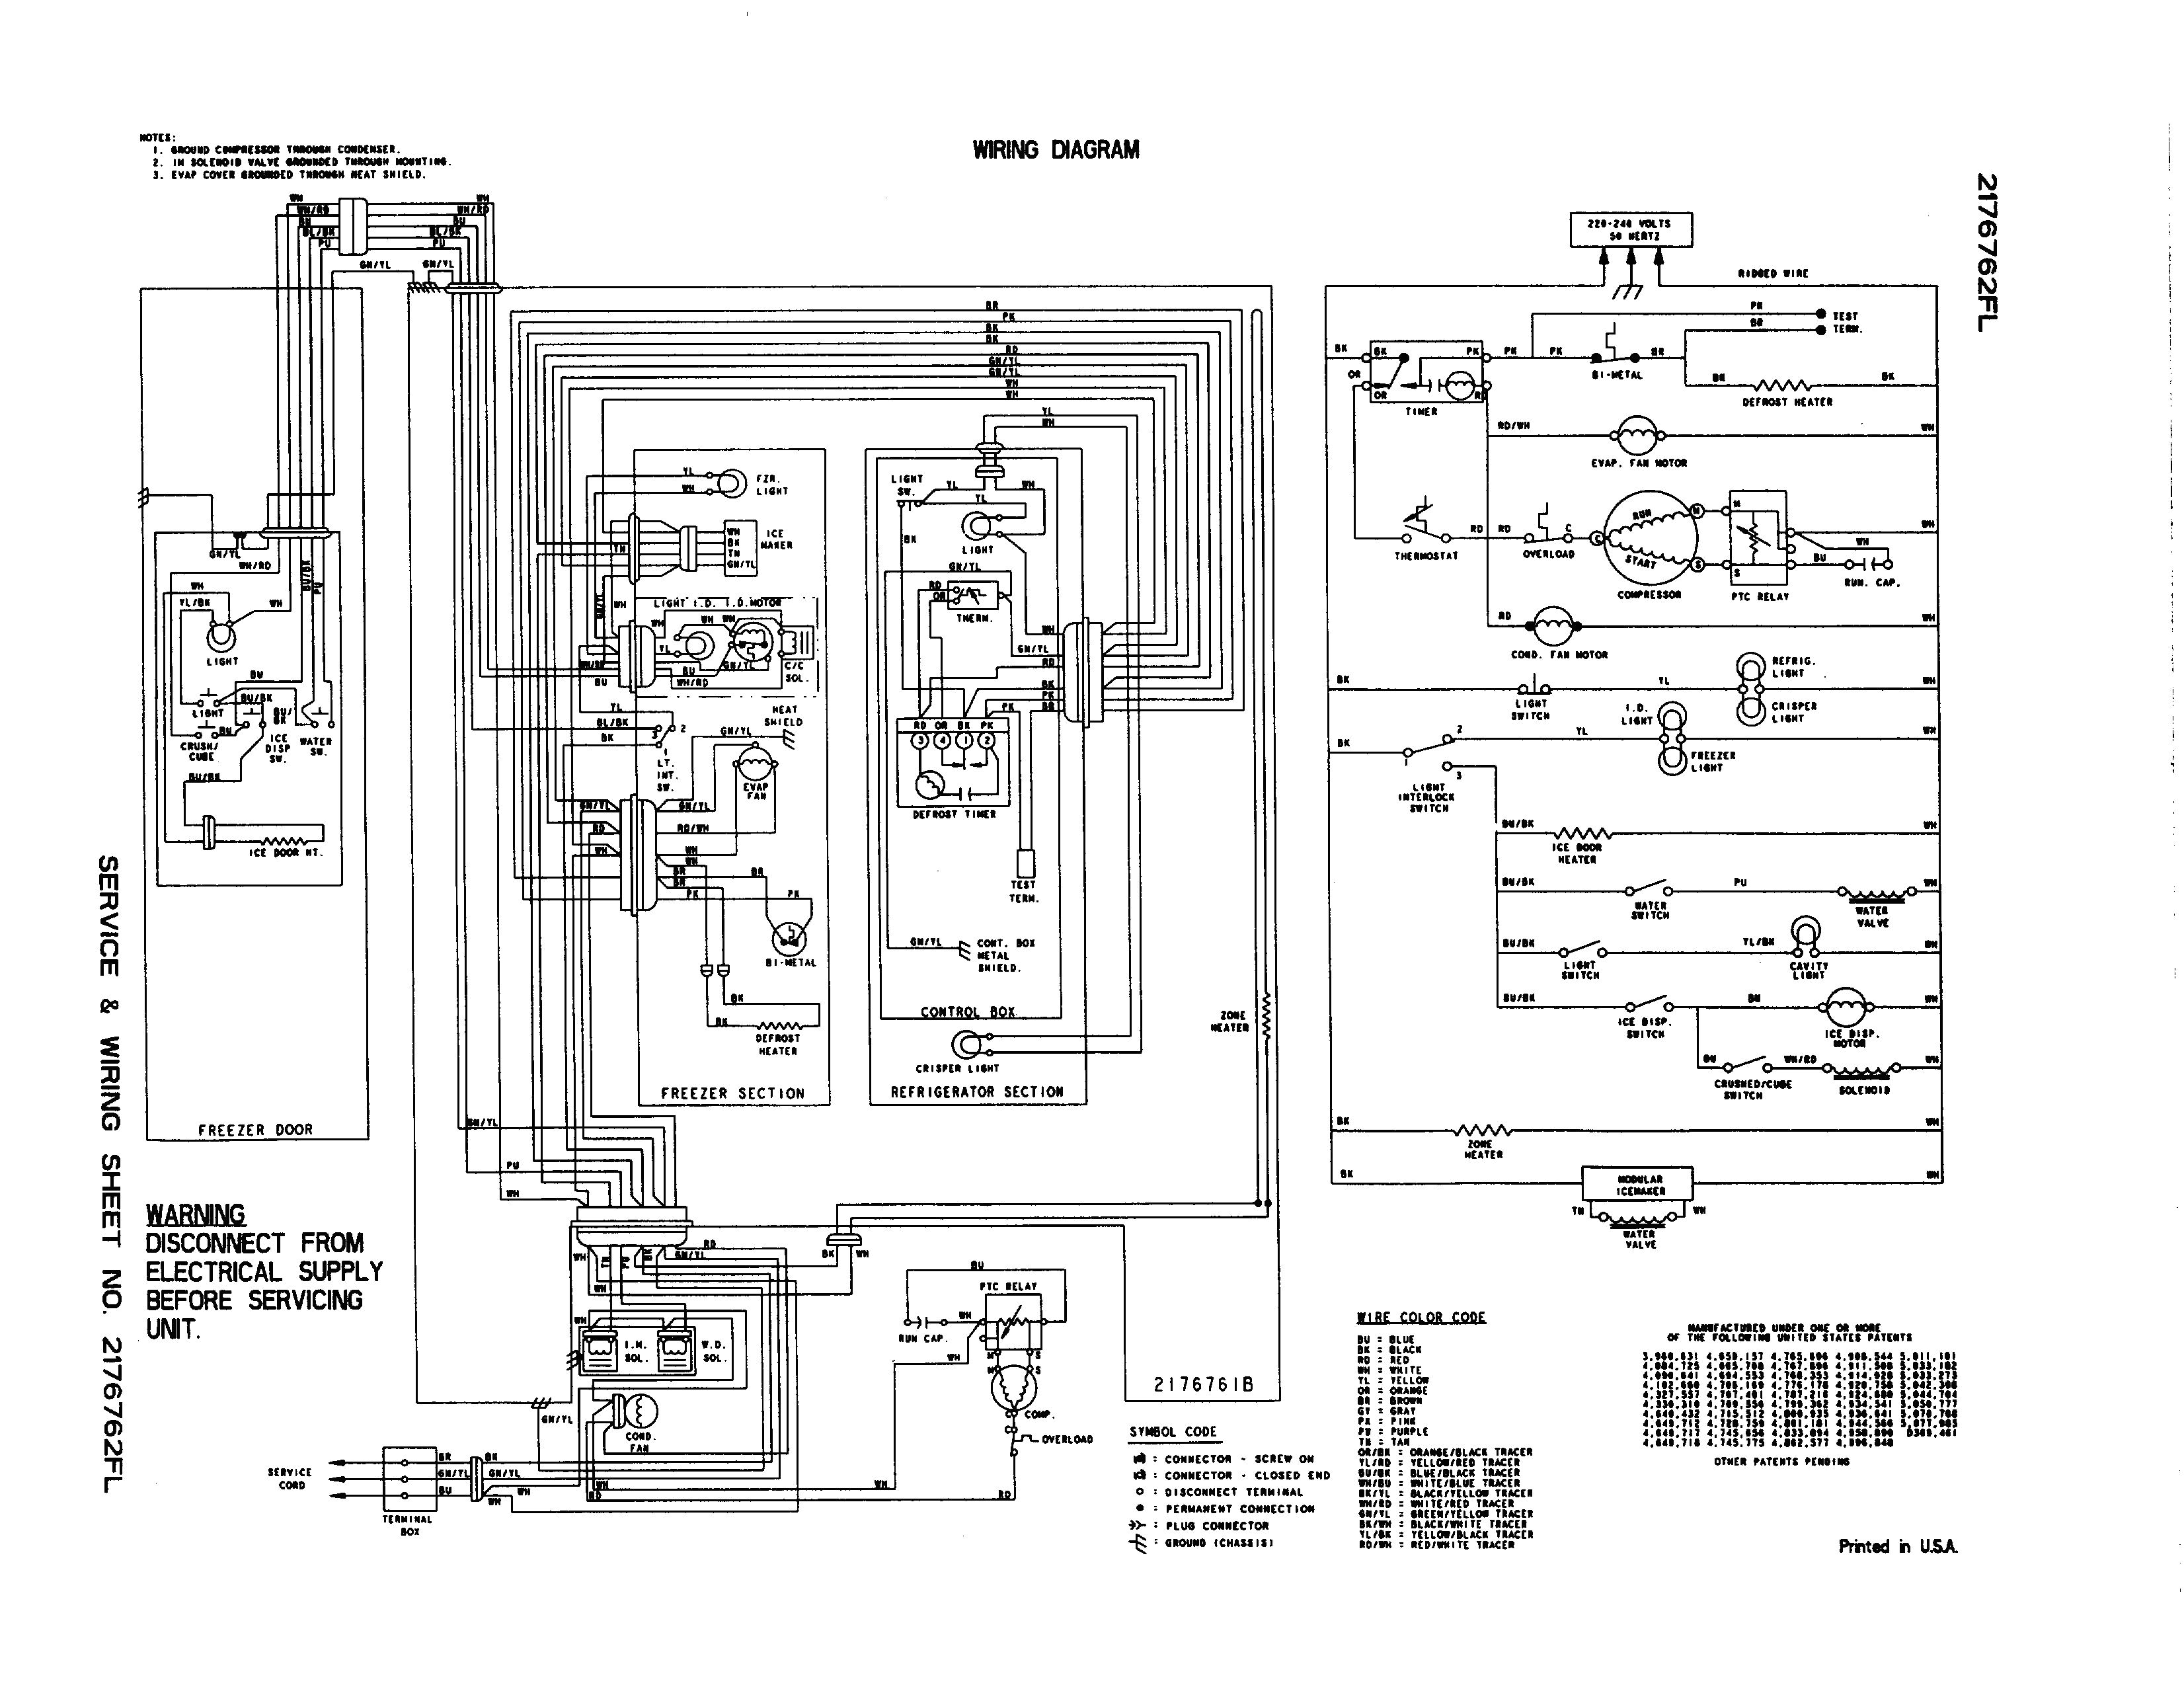 schematic wiring whirlpool lfe5800wo wiring diagrams for schematic wiring whirlpool lfe5800wo